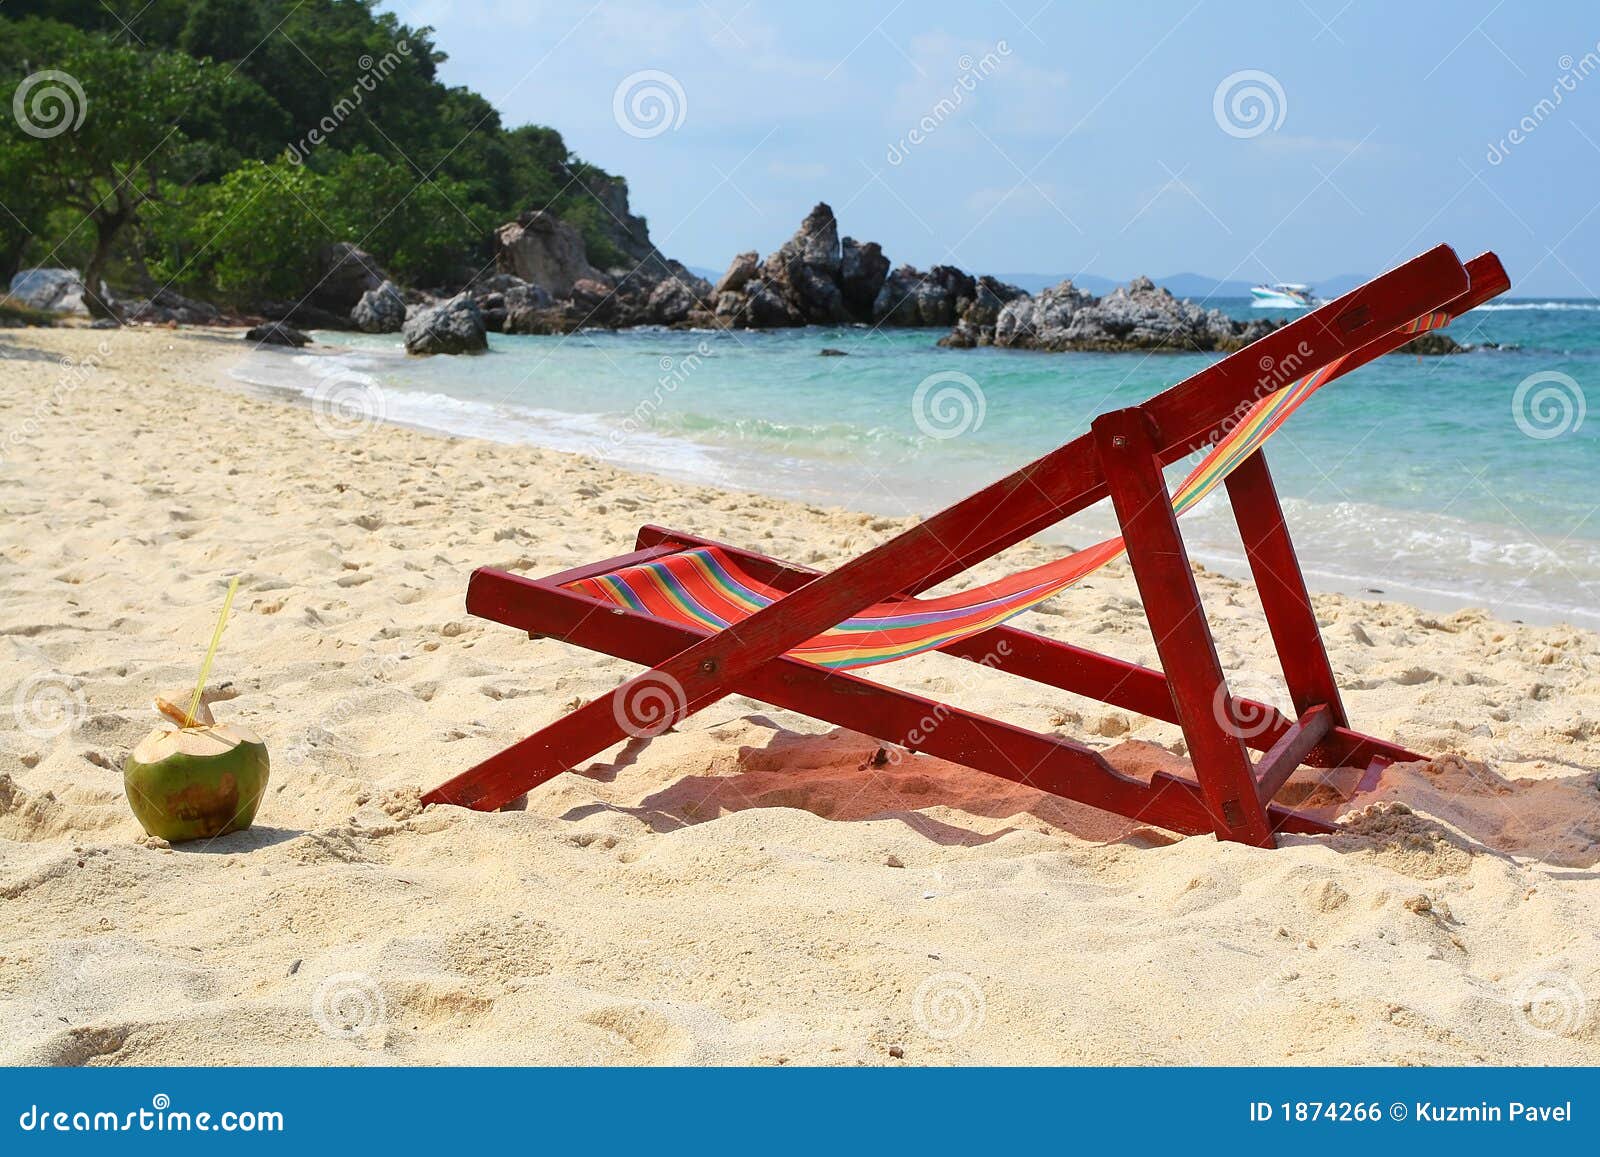 chaise longue on beach